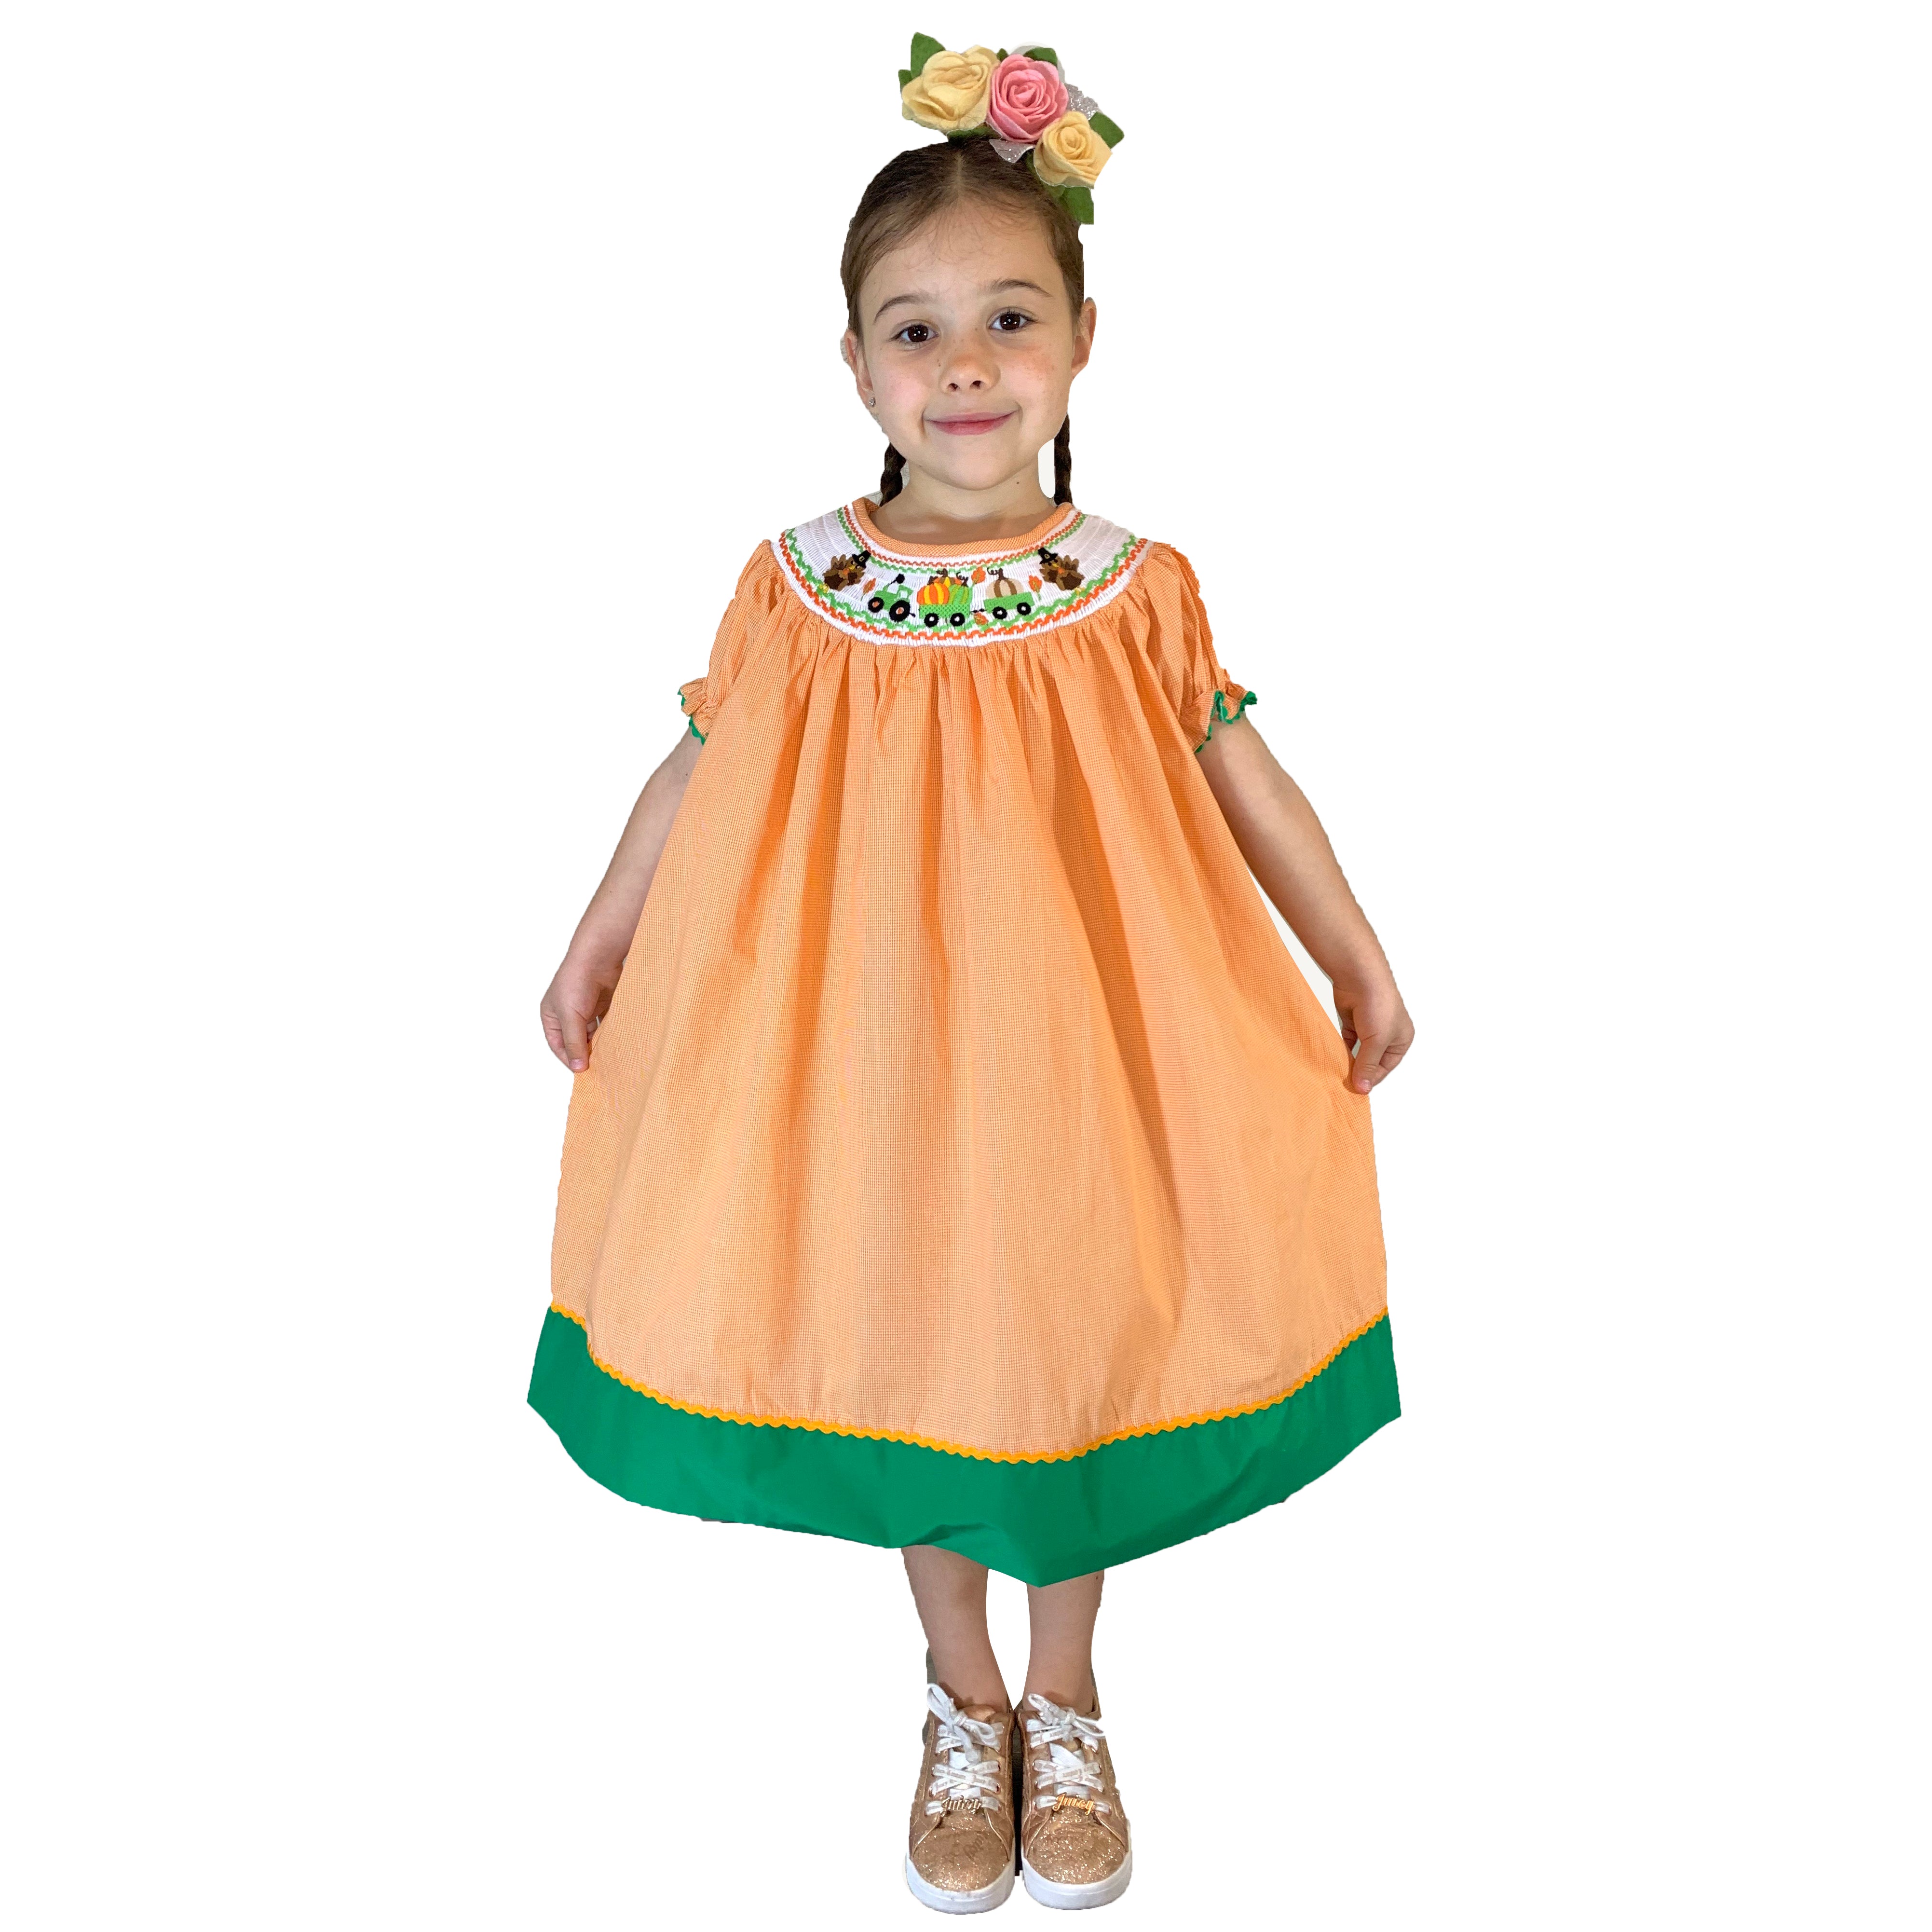 Baby Toddler Little Girl Thankskgiving Turkey & Pumpkin Tractor Gingham Bishop Dress - Orange/Green - Angeline Kids